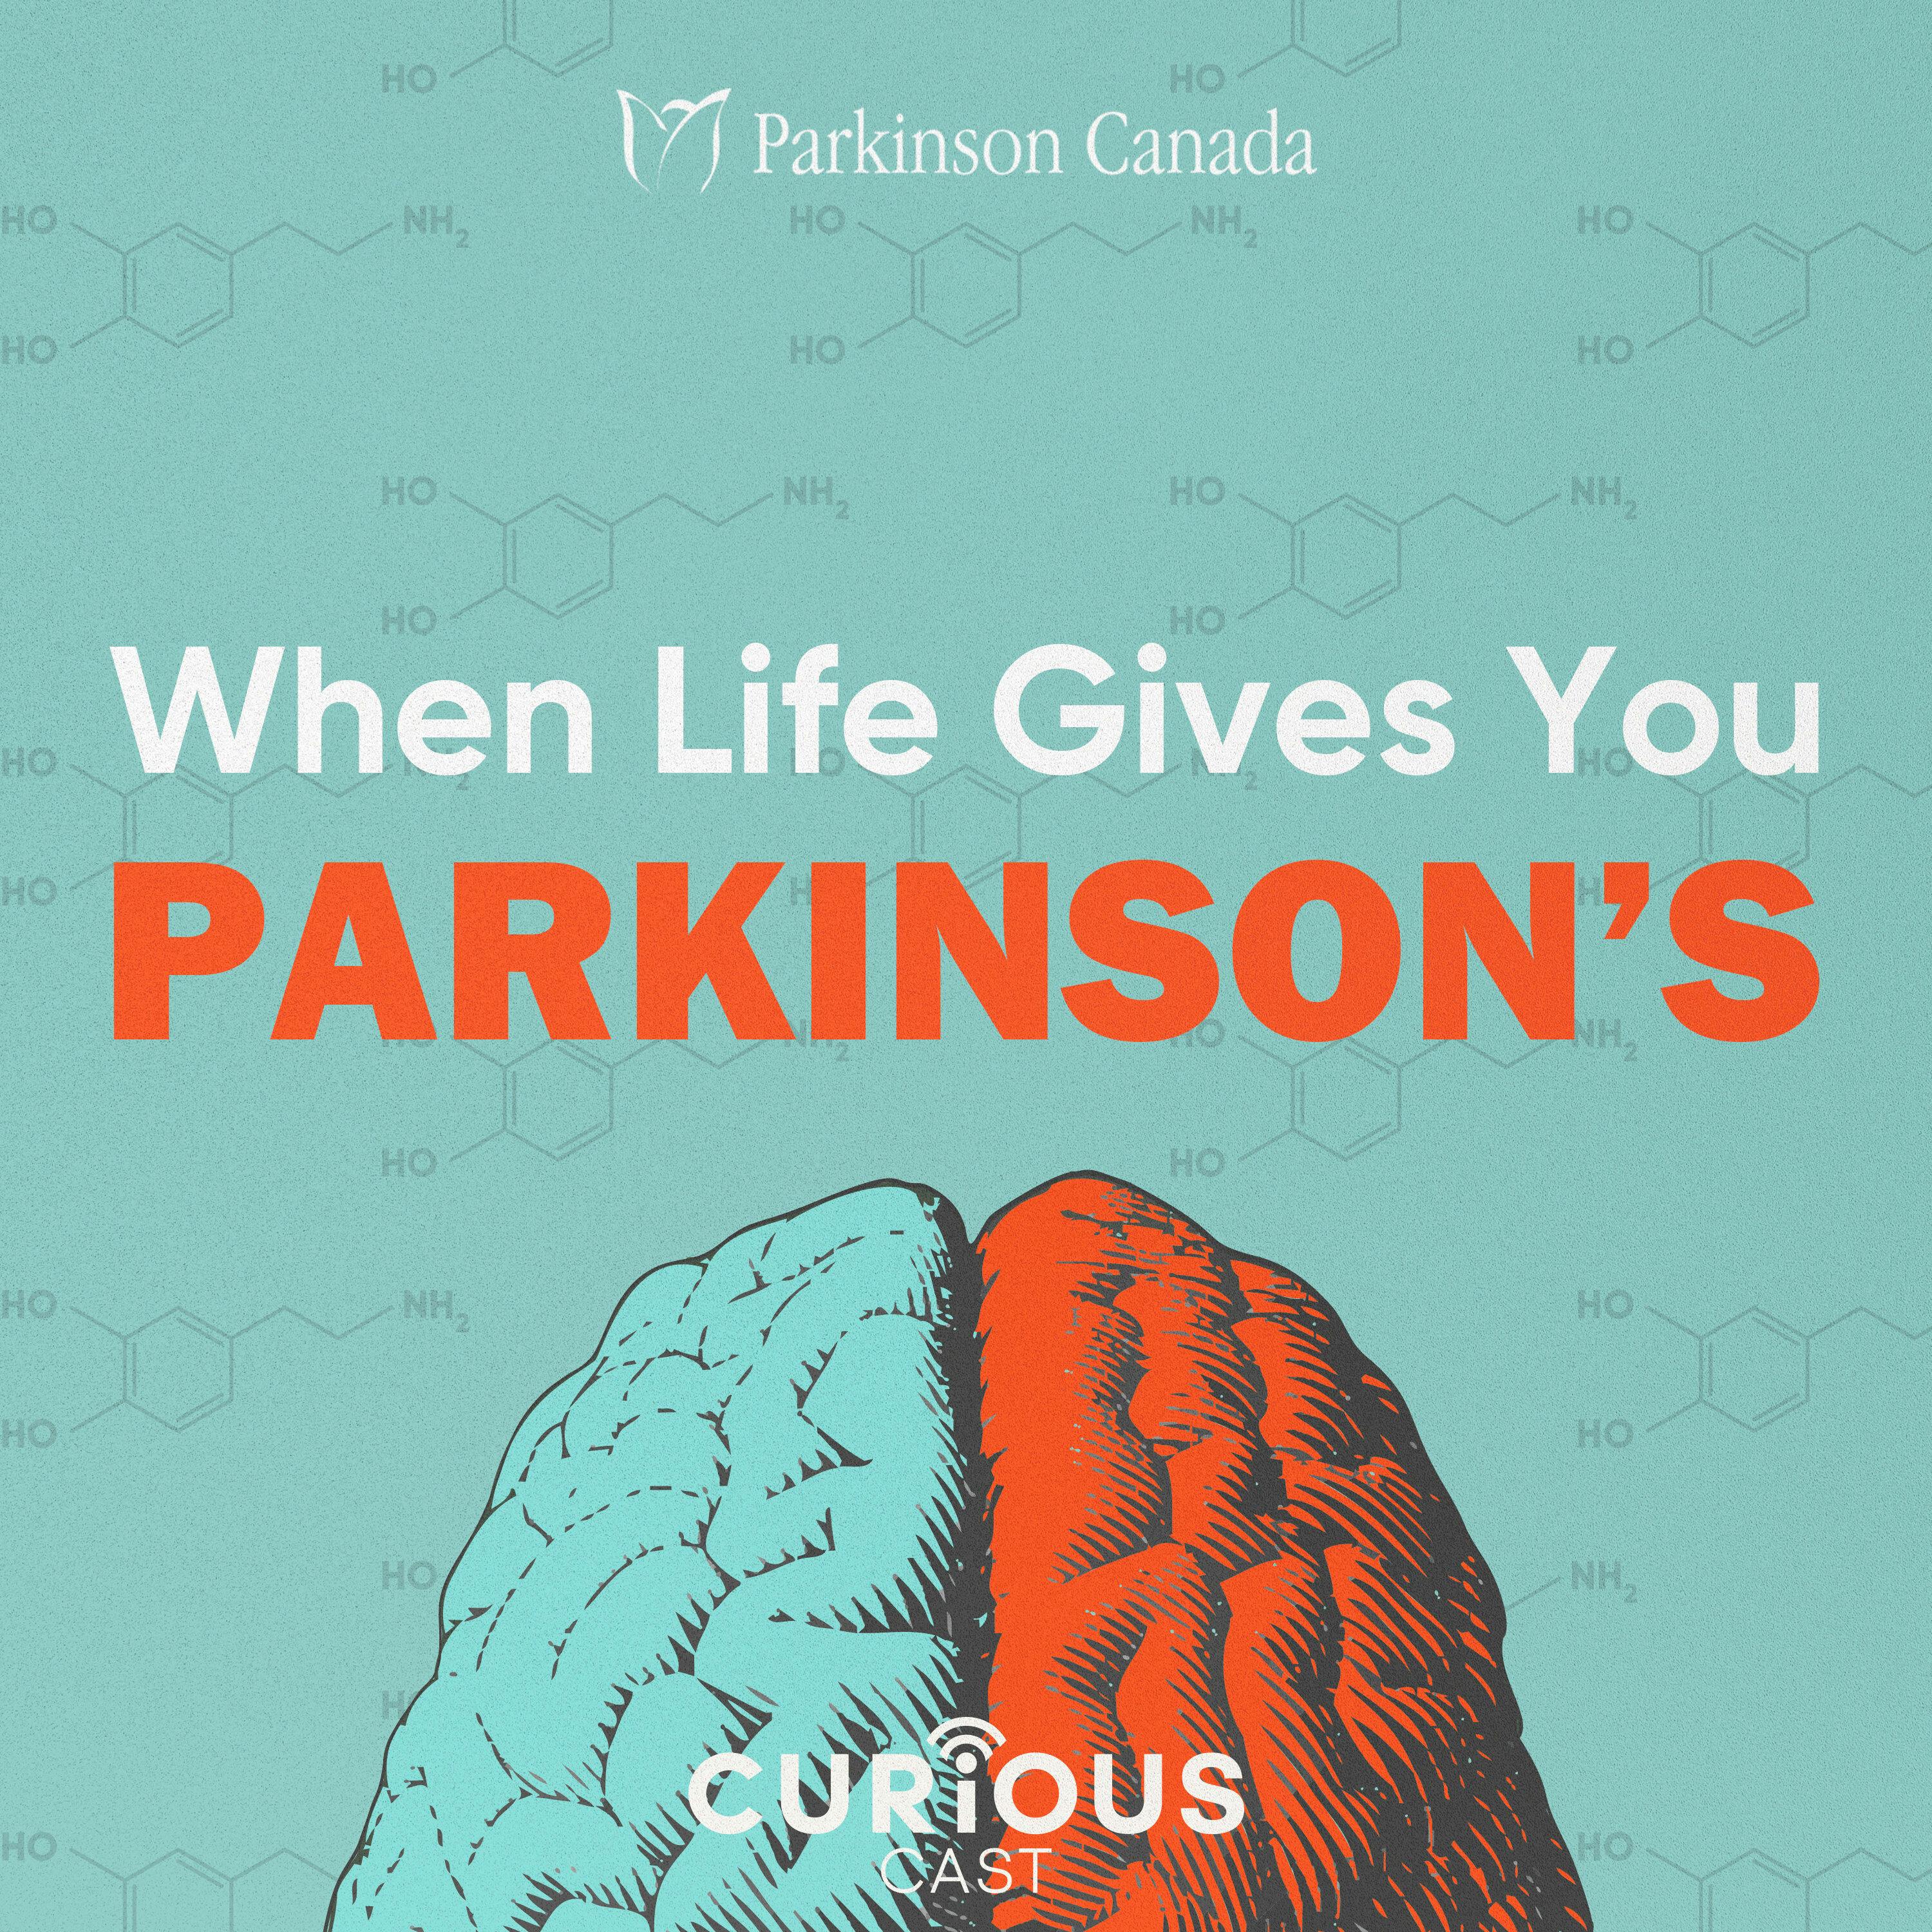 How did I get Parkinson’s?